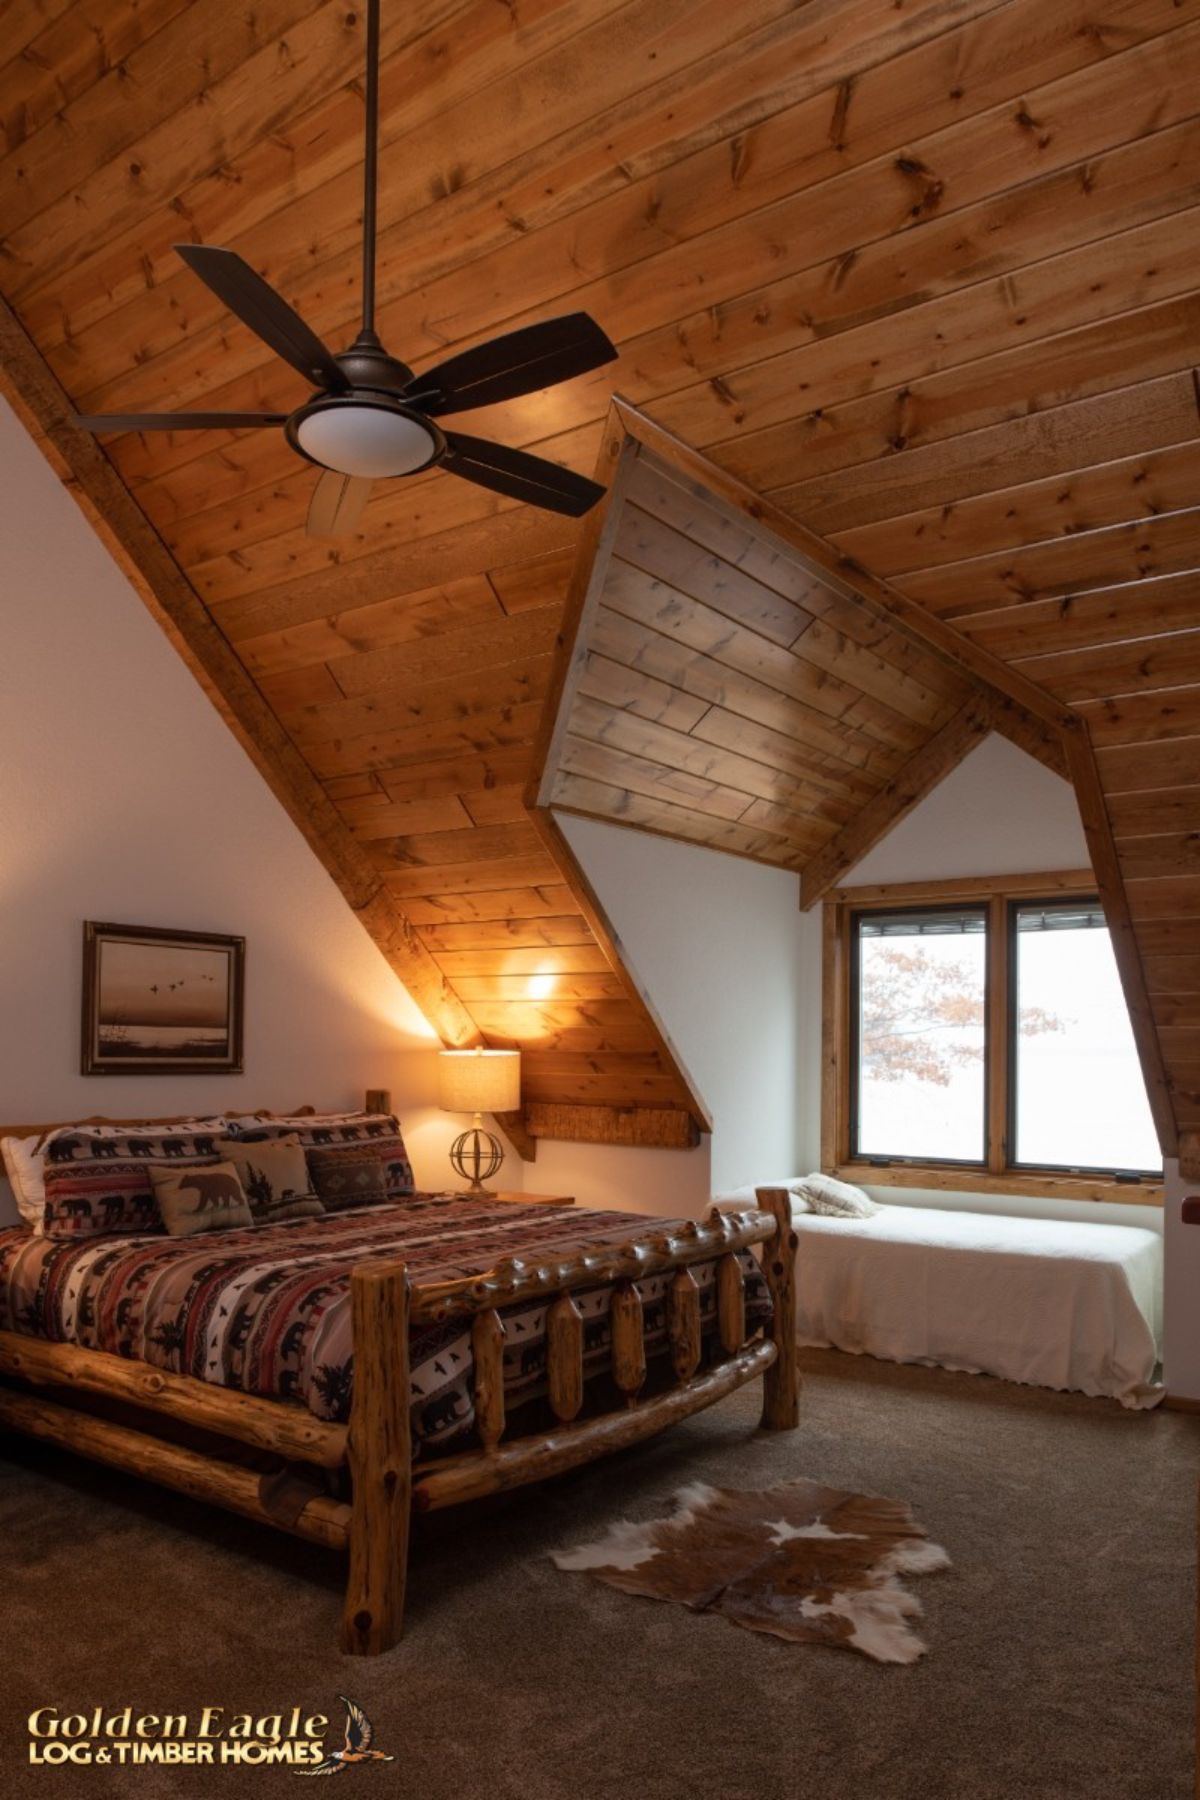 bed against white wall in log cabin dormer window bedroom